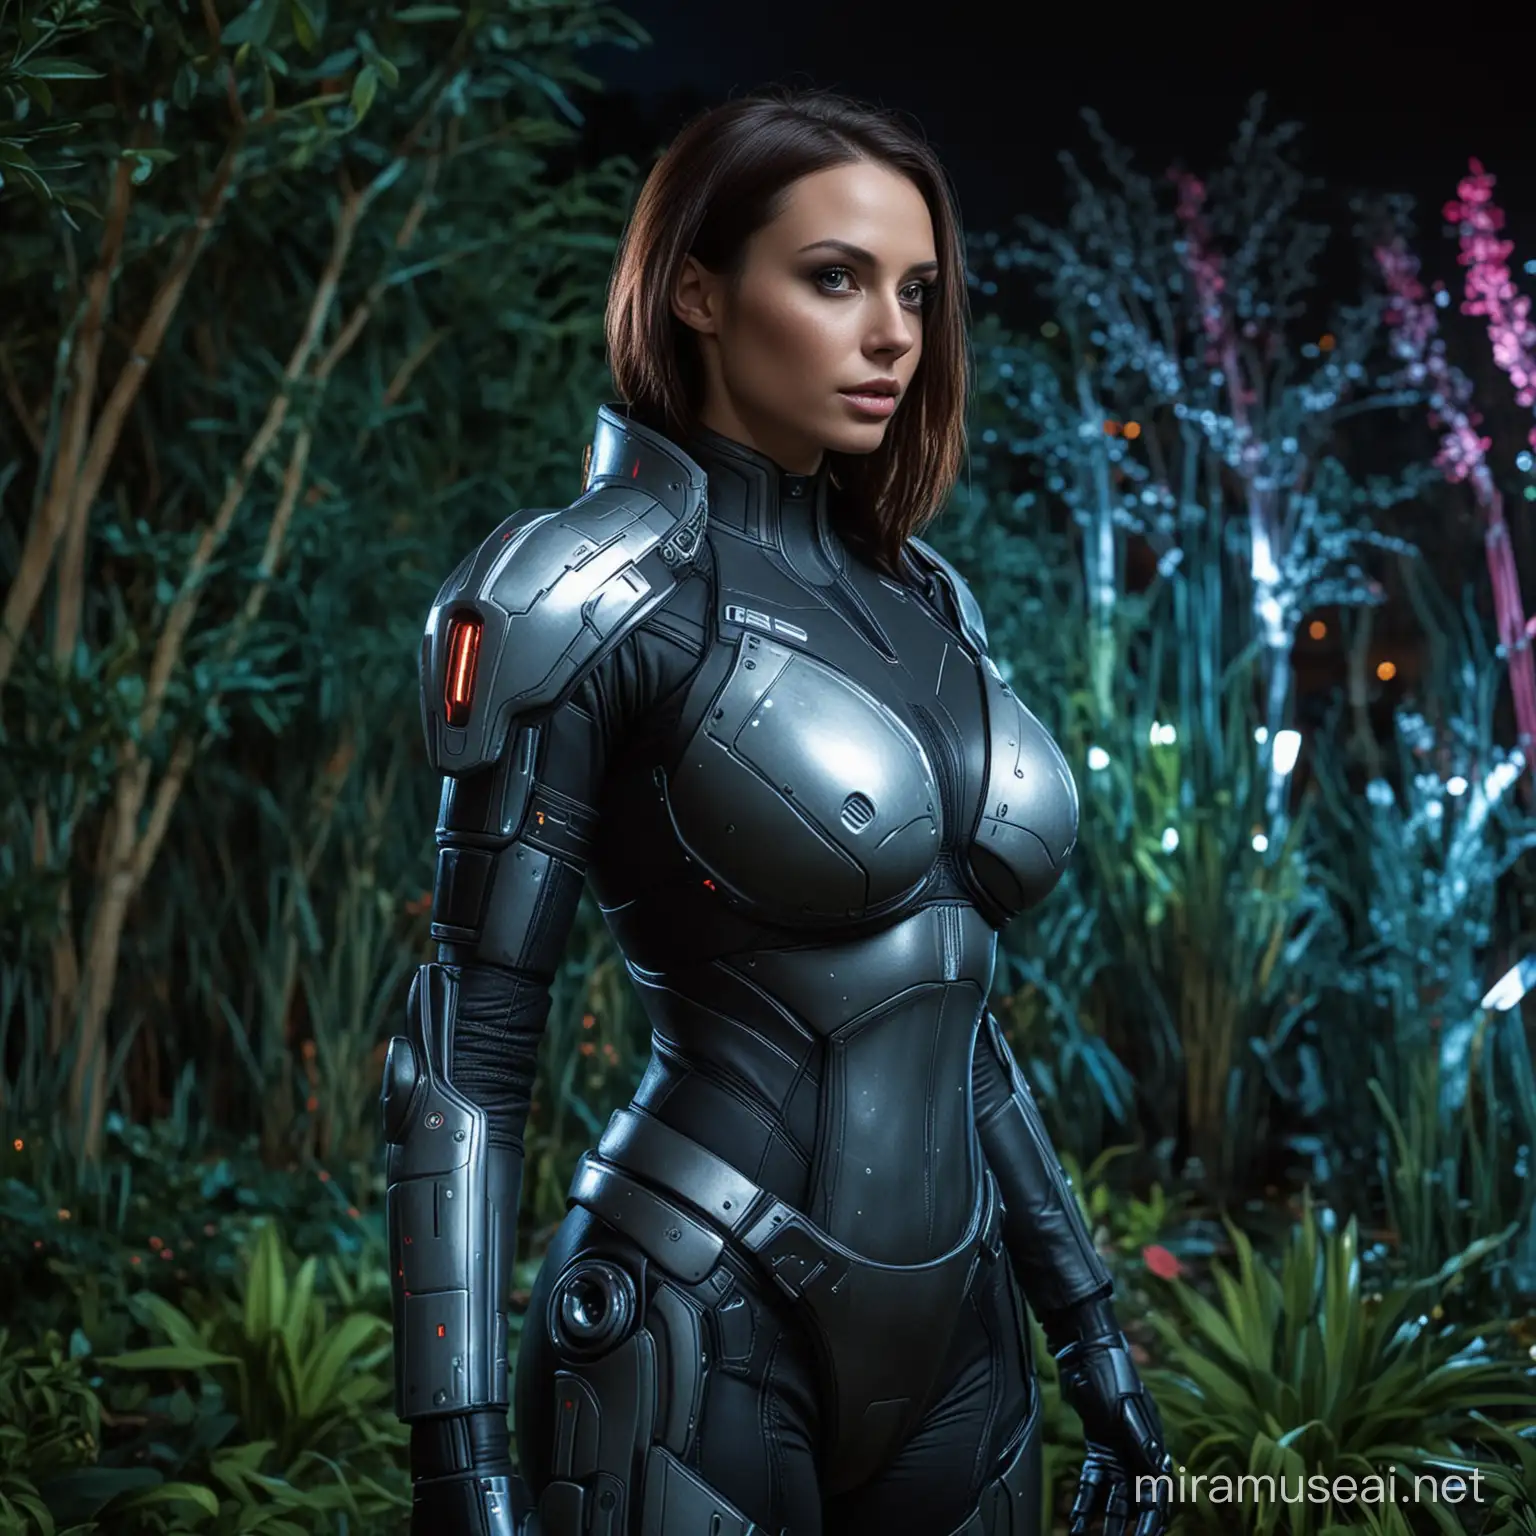 Futuristic Garden Night Brunette Model in Mass Effect Armor